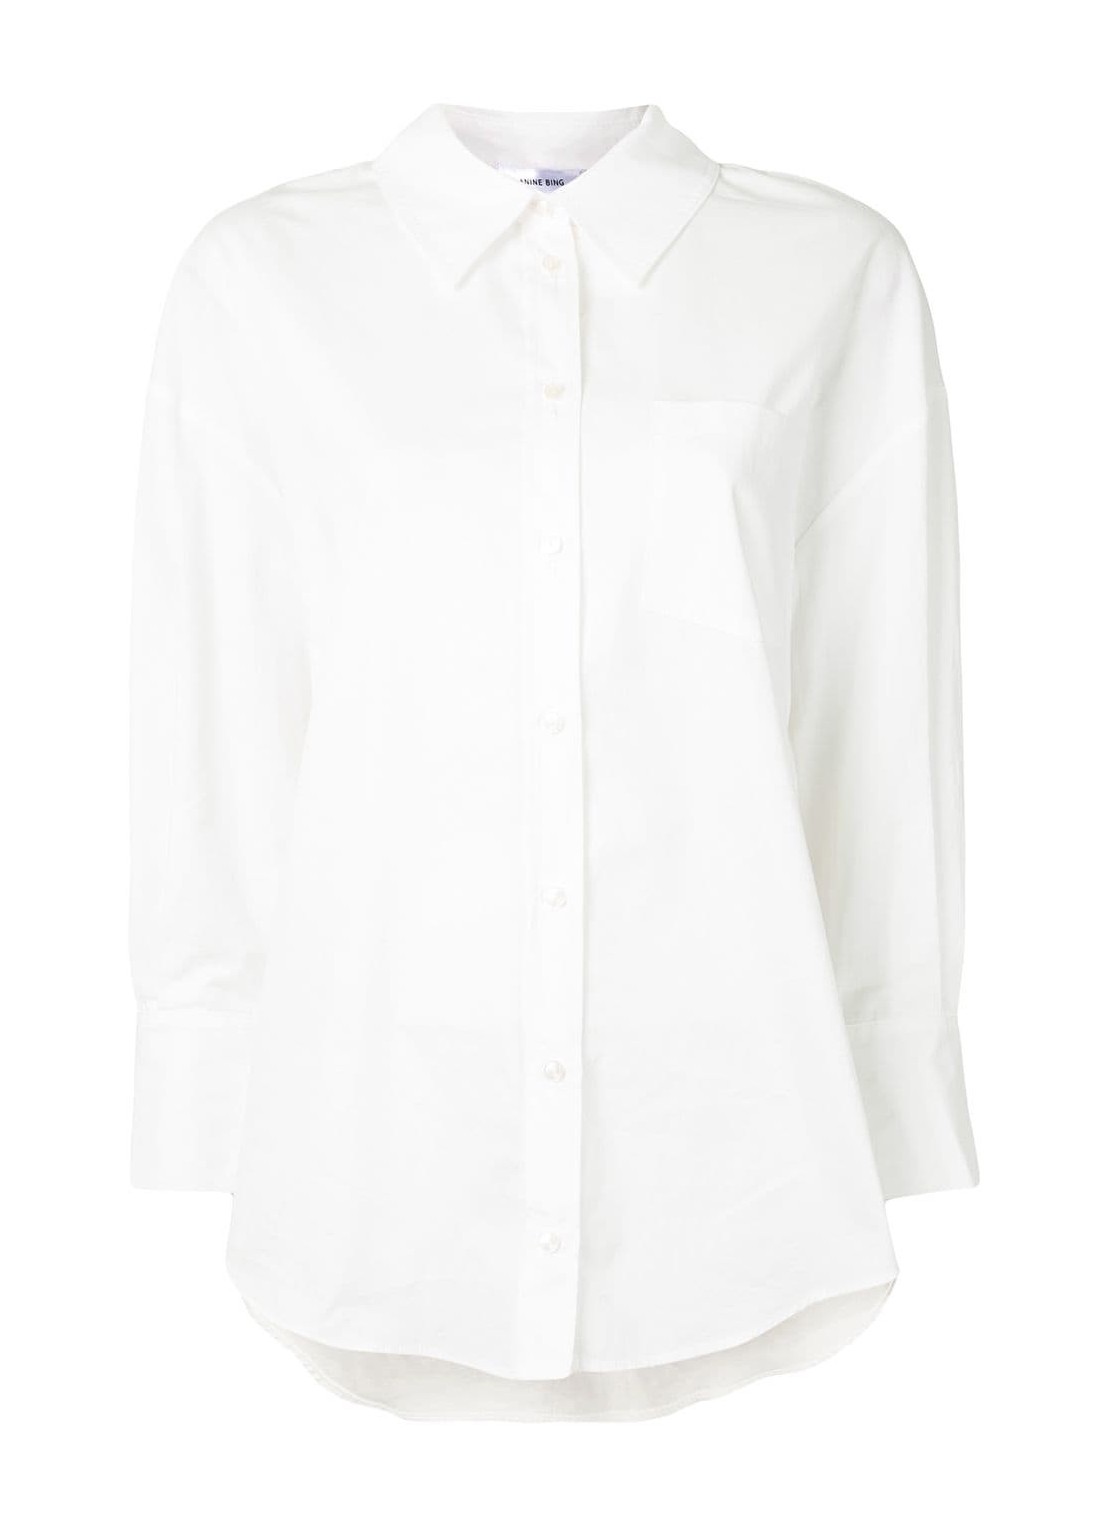 anine bing mika shirt - a092006100 white Talla L